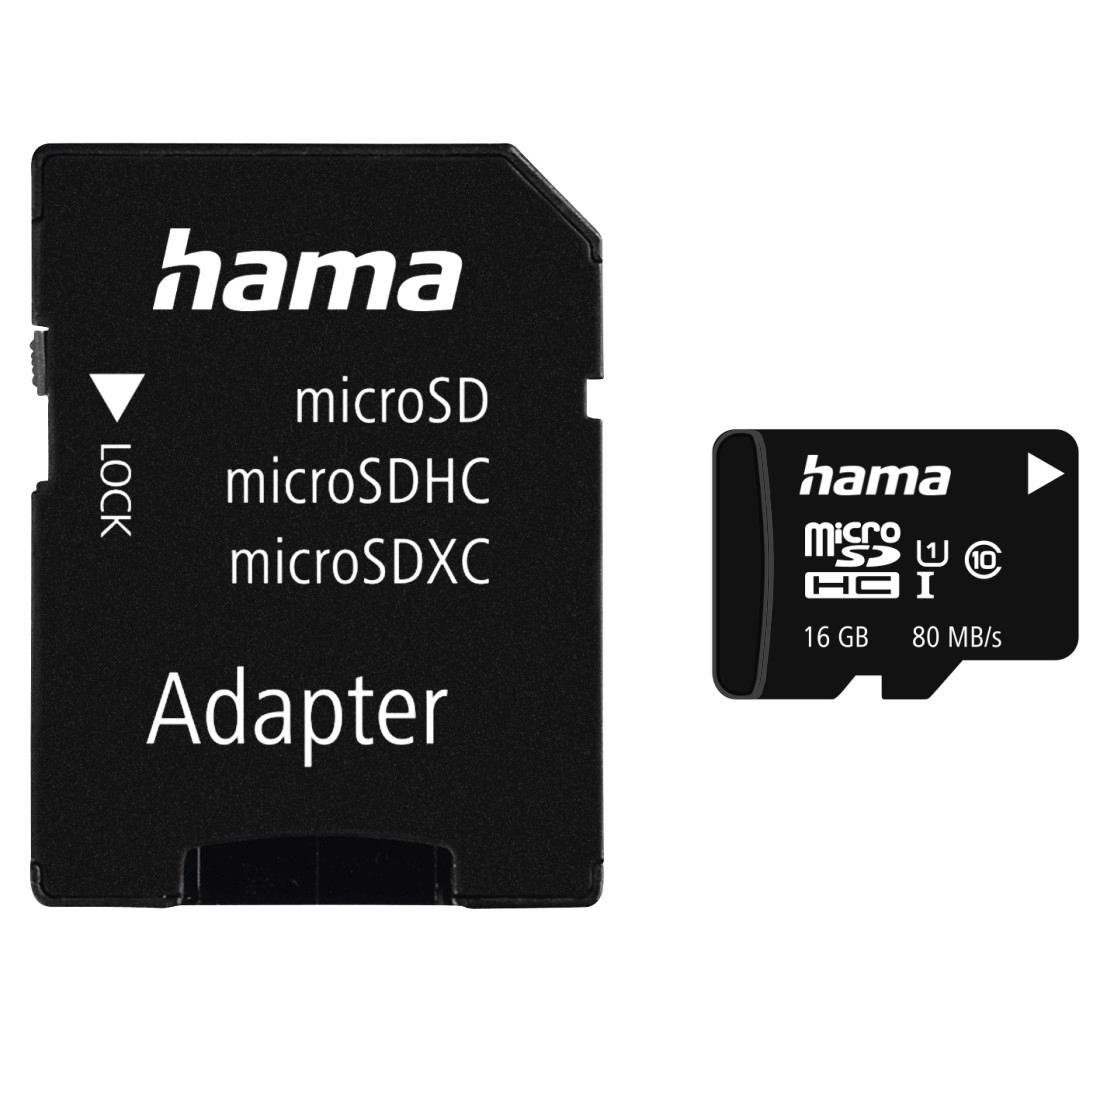 Hama microSDHC 16GB Class 10 UHS-I 80MB/s + Adapter/Foto Speicherkarte (16 GB, UHS-I Class 10, 80 MB/s Lesegeschwindigkeit)